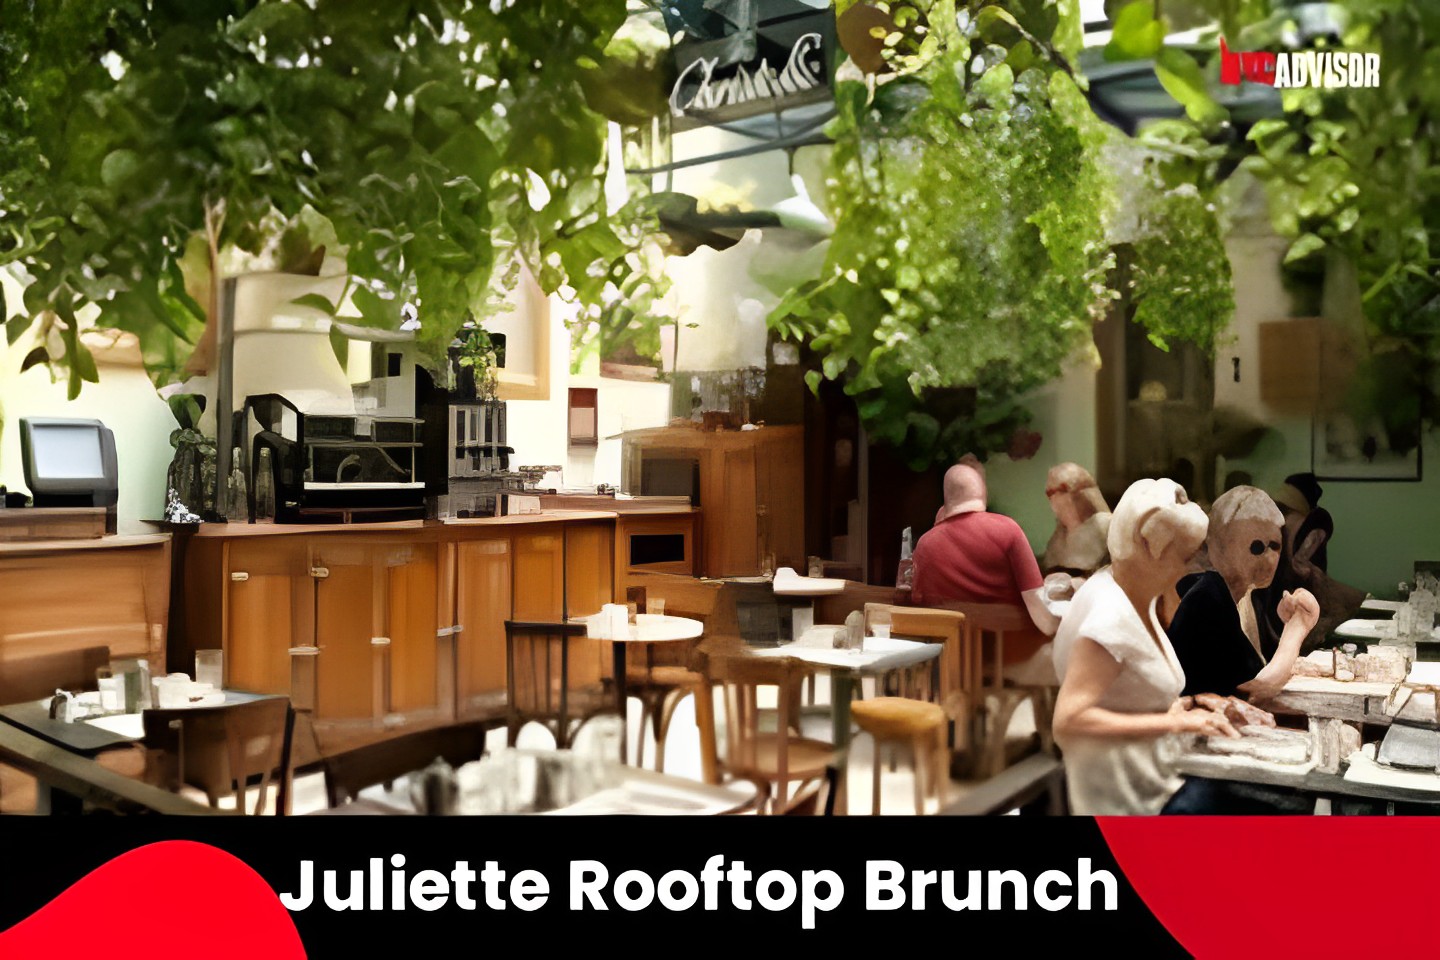 The Juliette Rooftop Brunch in NYC